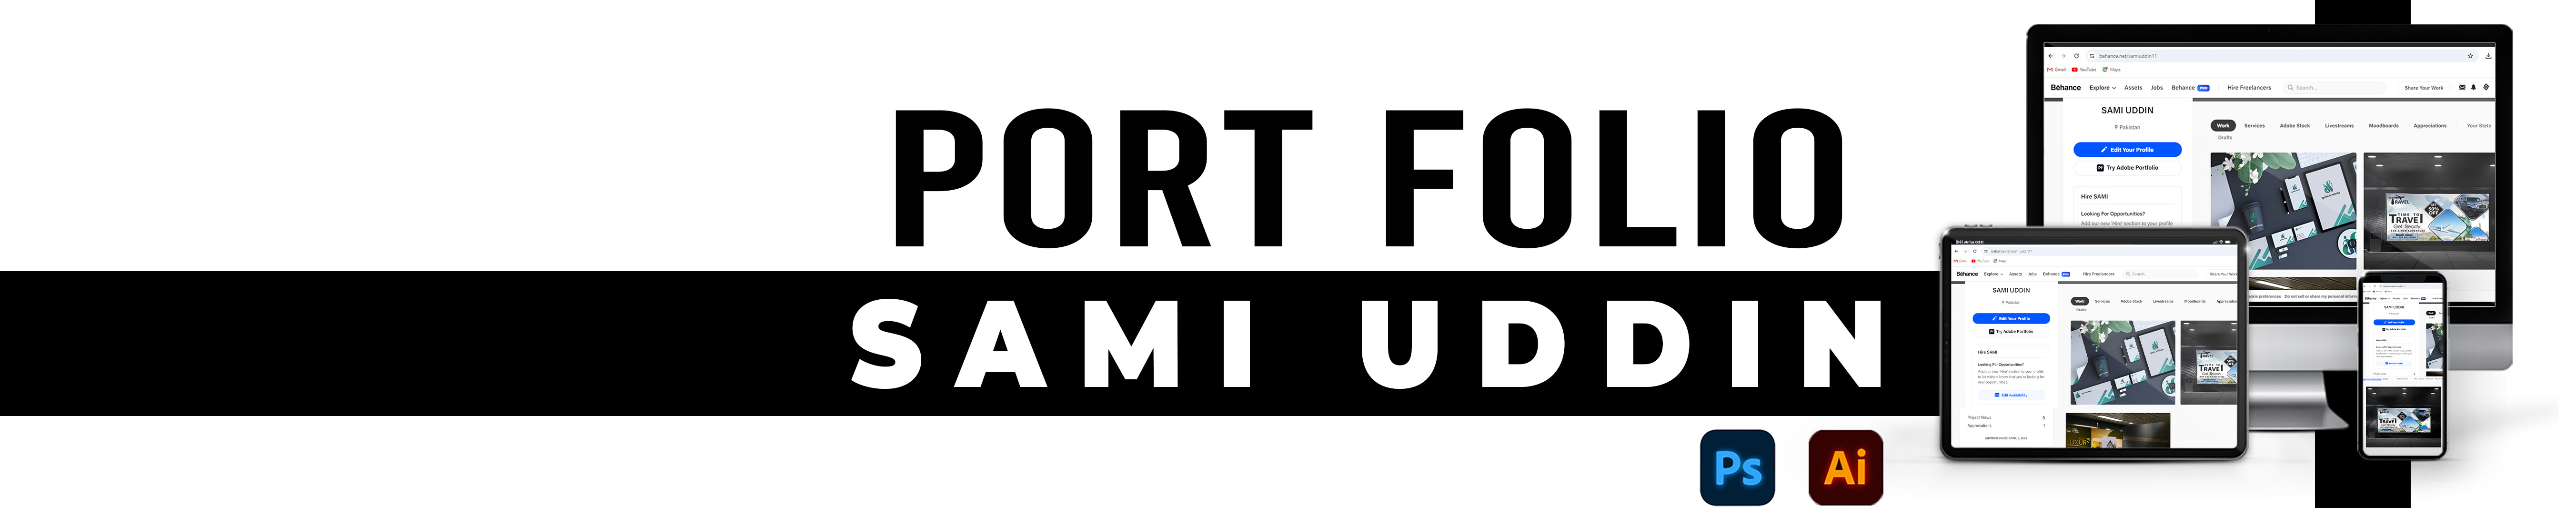 SAMI UDDIN's profile banner